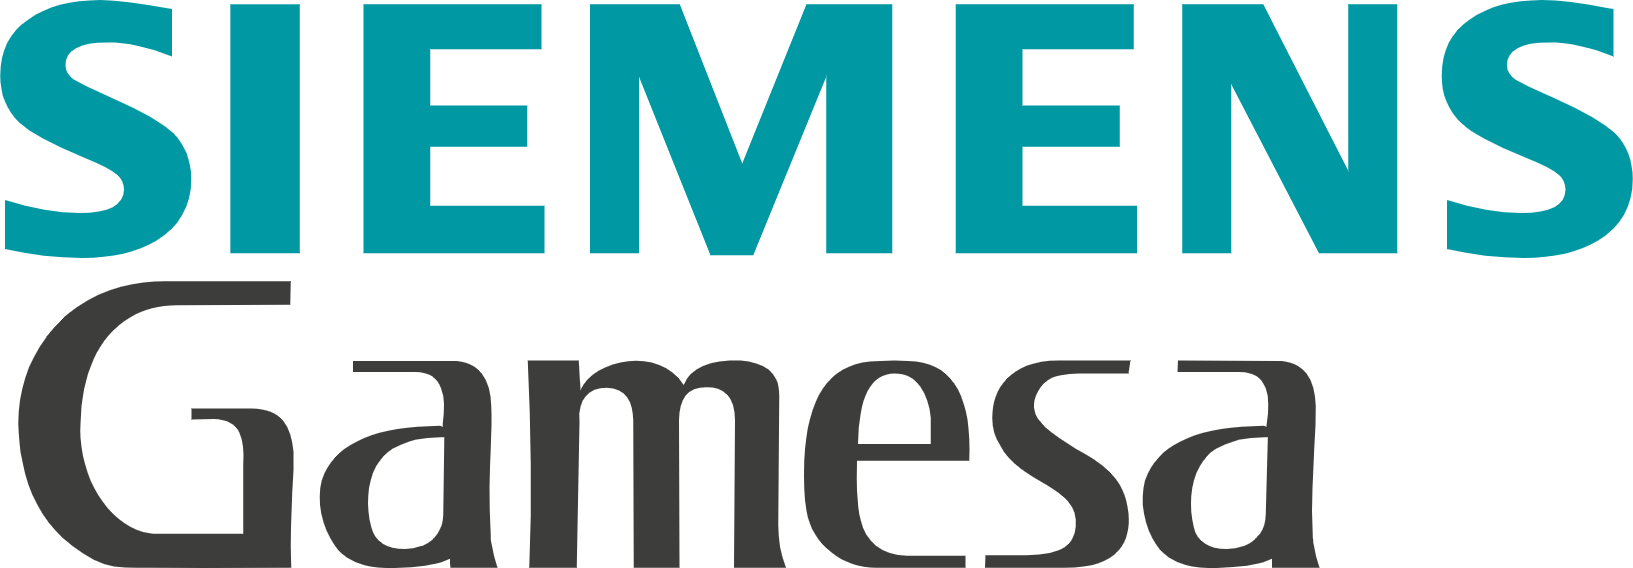 Siemens Gamesa logo (PNG transparent)